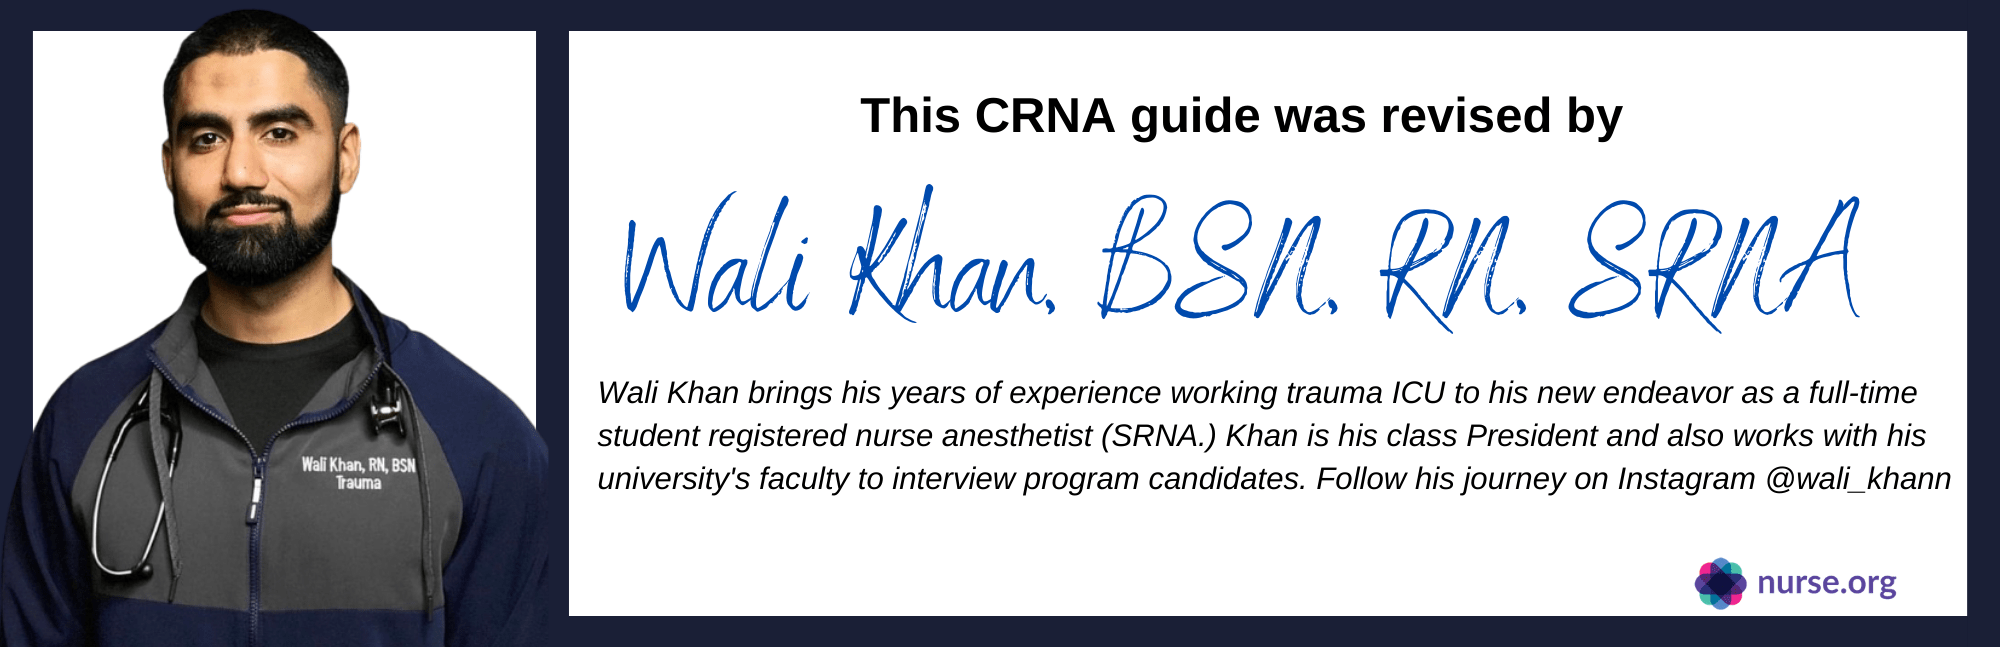 Expert reviewed by Wali Khan